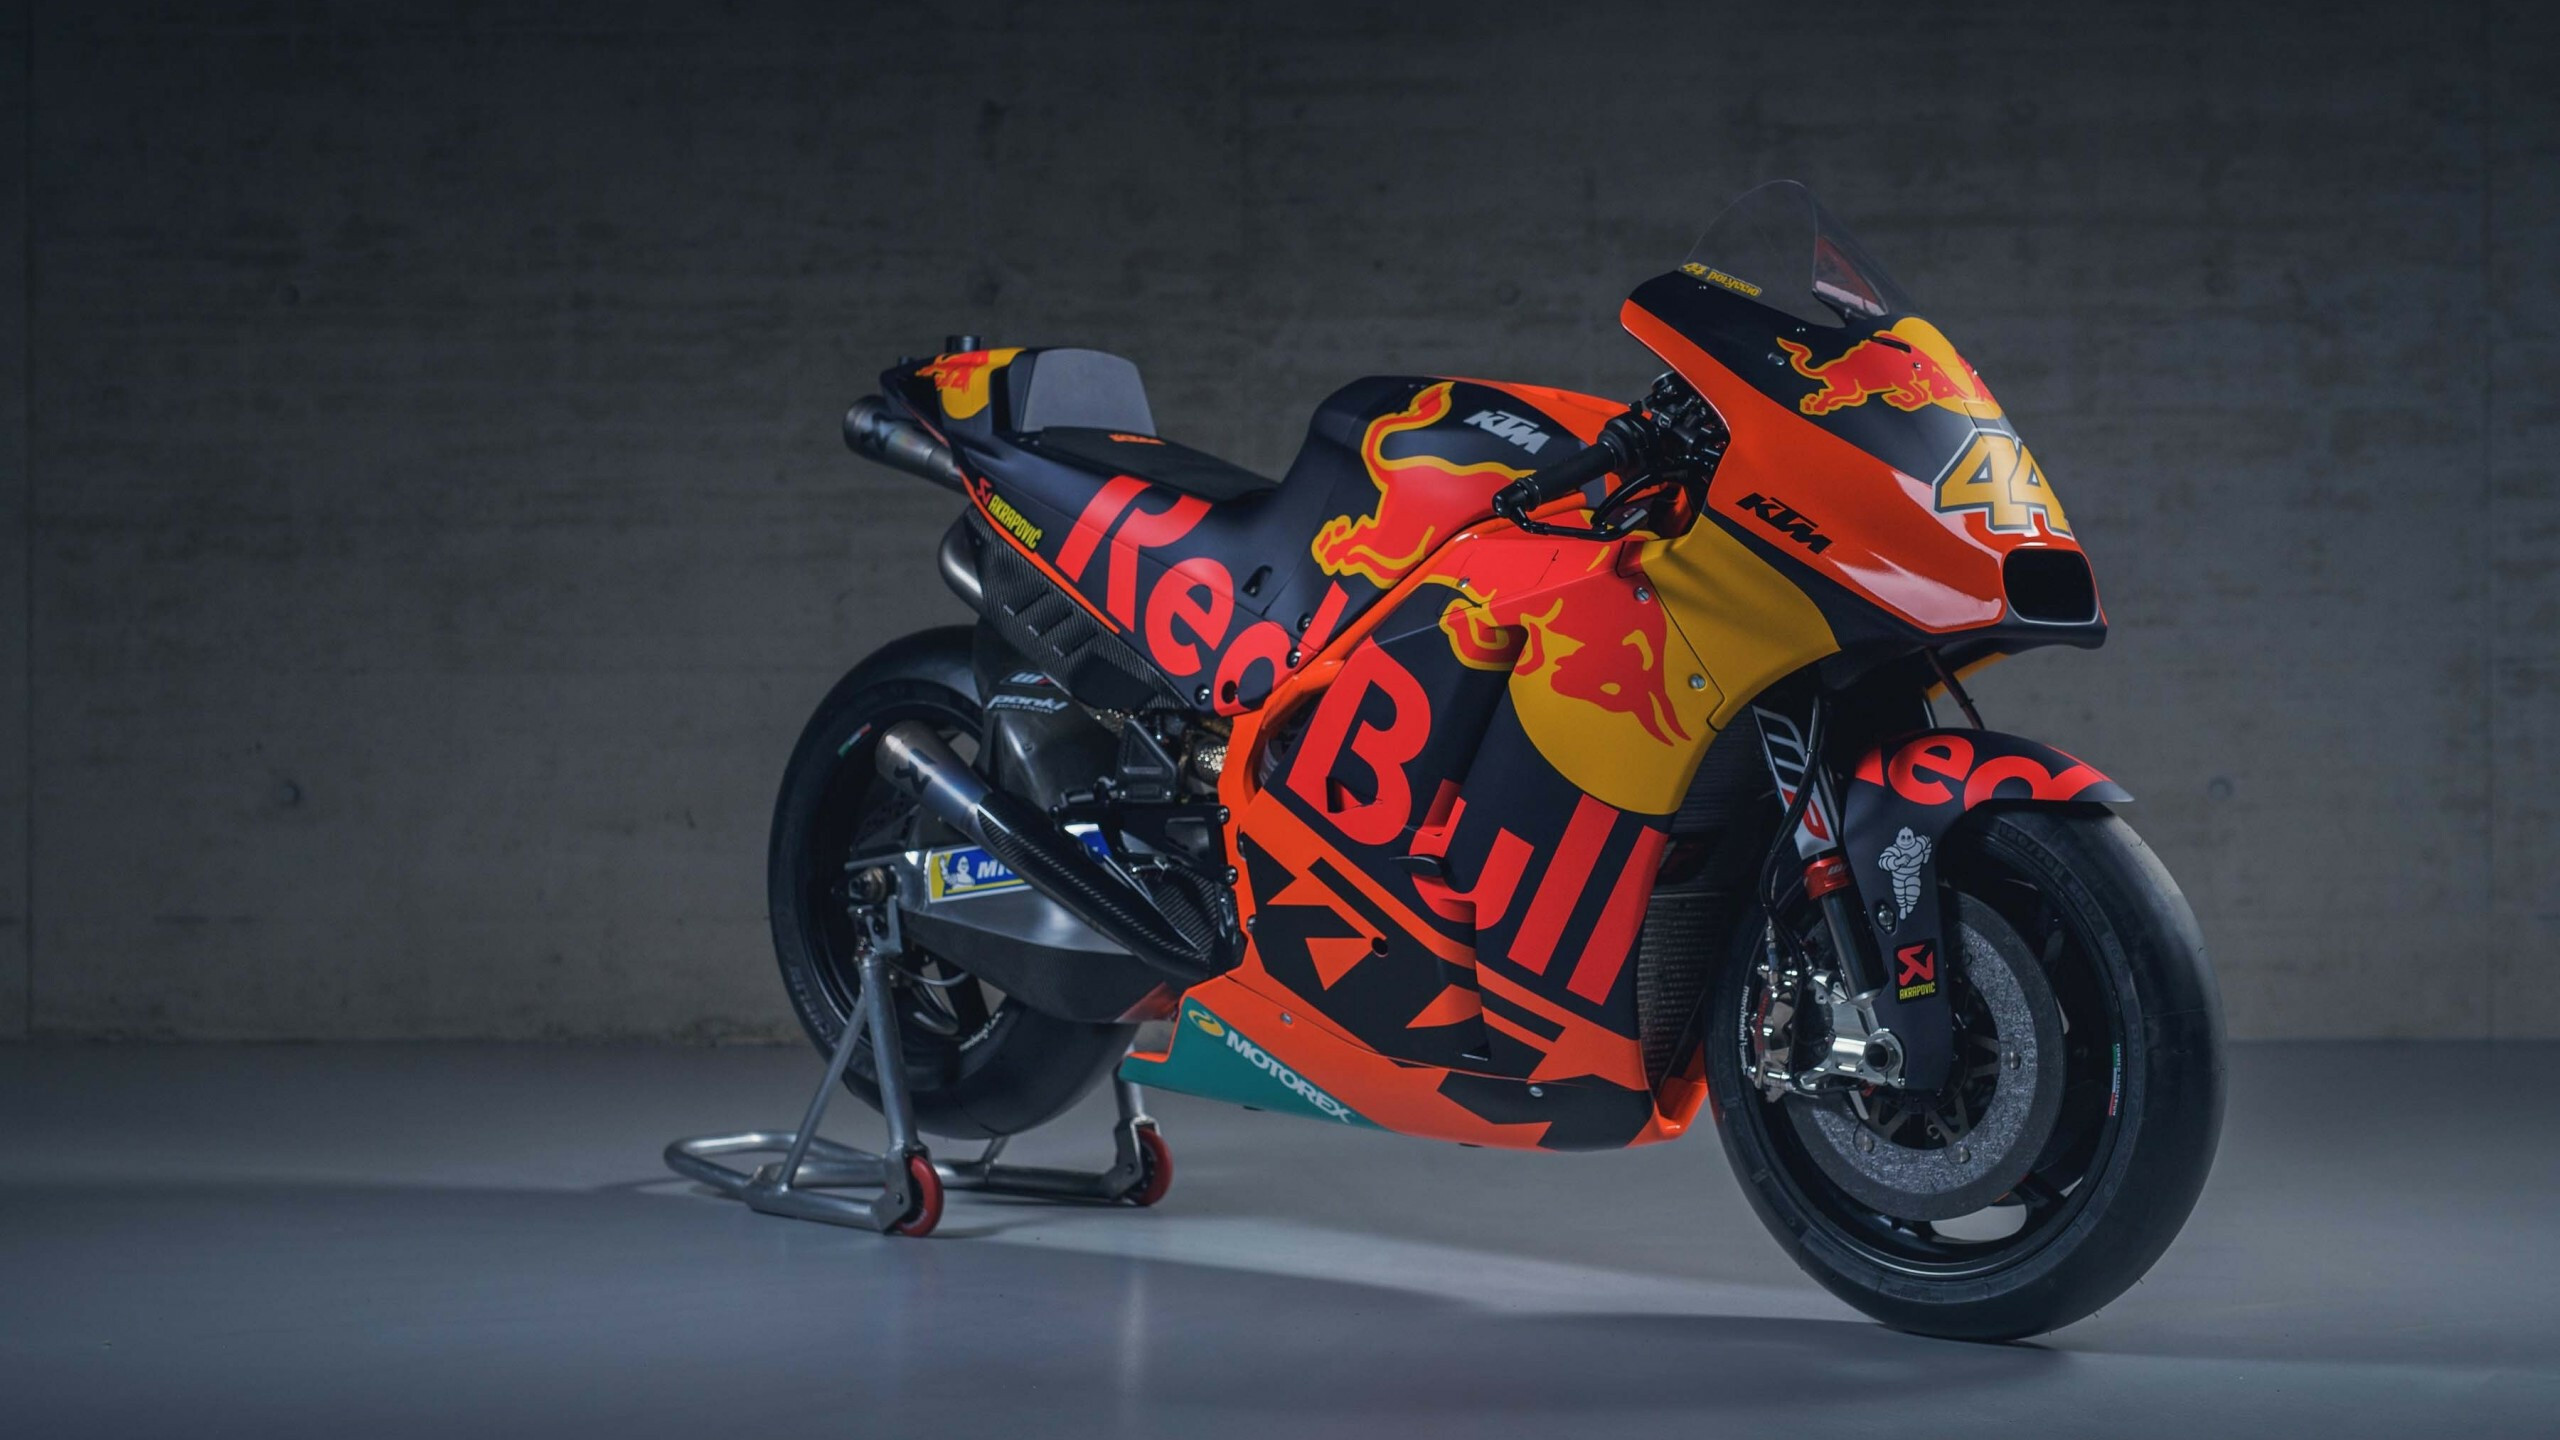 KTM motorcycles, Red Bull MotoGP, Sport bike wallpapers, iMac 27 inch, 2560x1440 HD Desktop